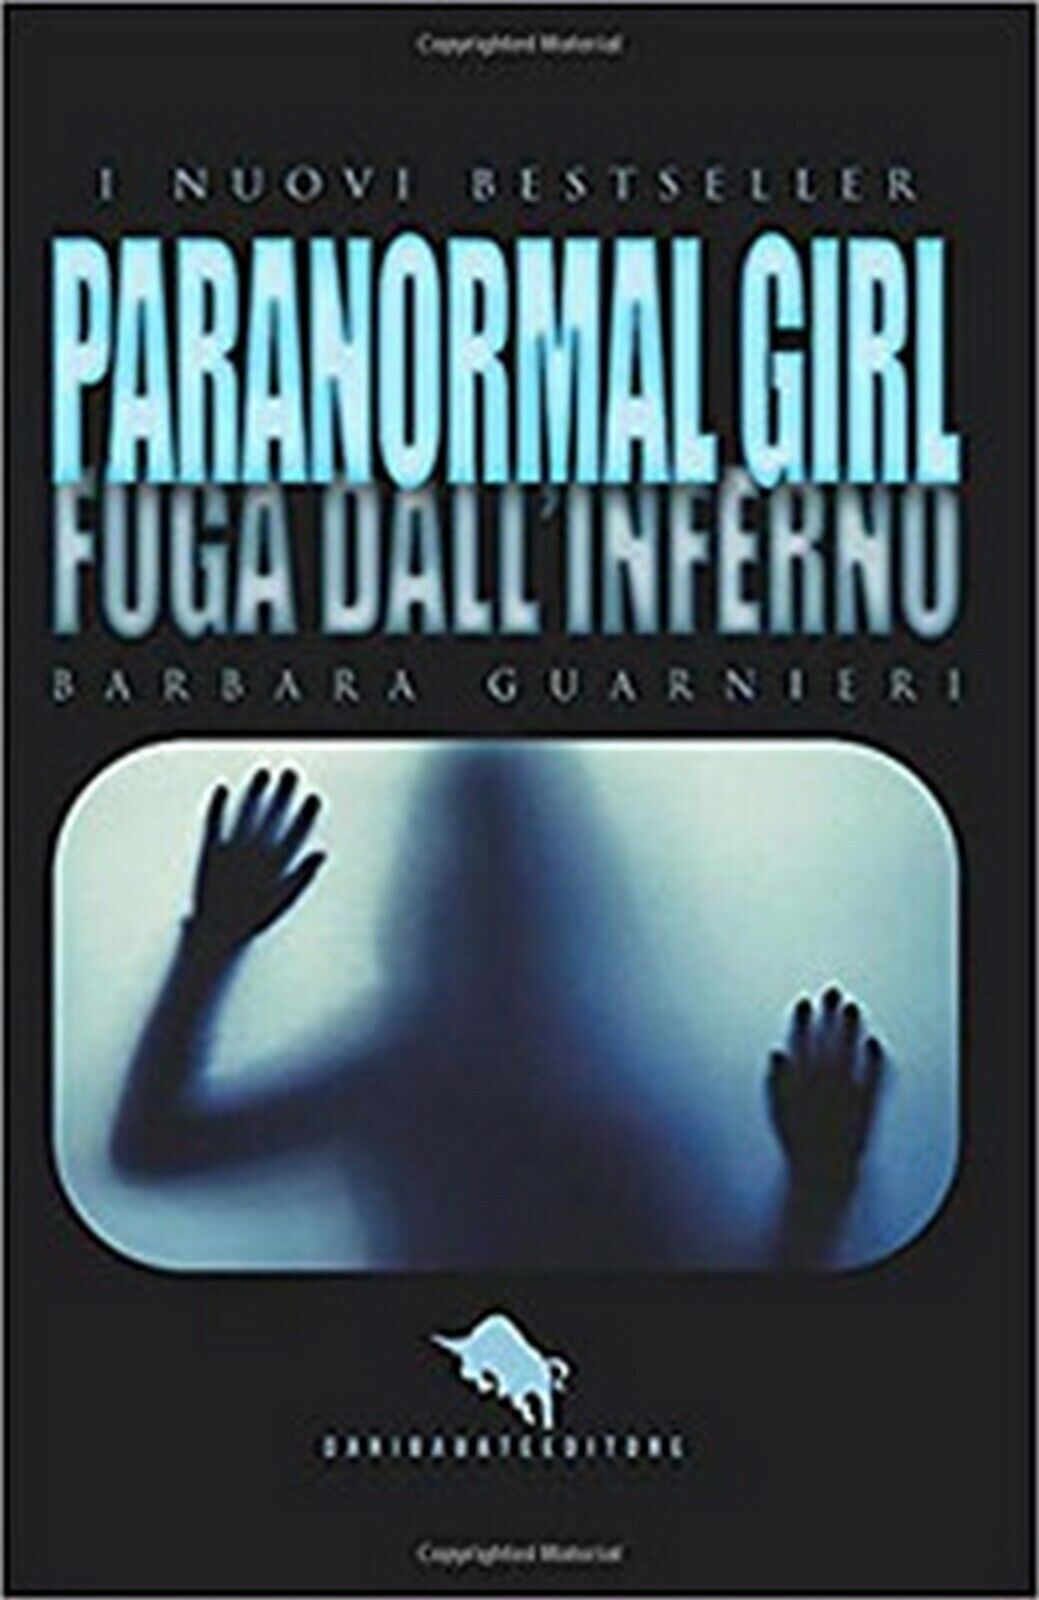 Paranormal girl. Fuga dalL'inferno  di Barbara Guarnieri,  2019,  How2 libro usato